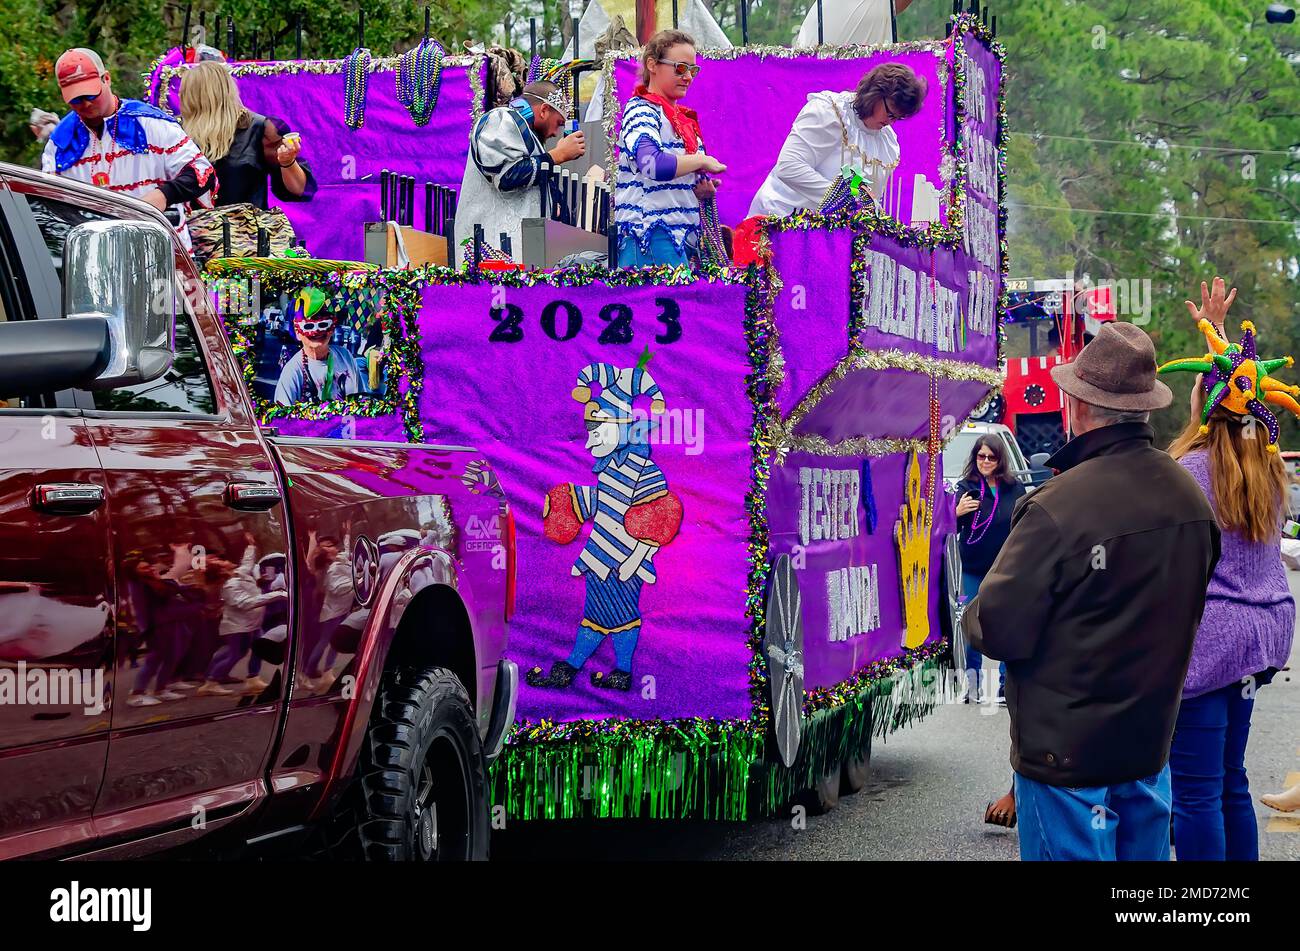 Members of Krewe de la Dauphine ride a Mardi Gras float during the Krewe de la Dauphine Mardi Gras parade, Jan. 21, 2023, in Dauphin Island, Alabama. Stock Photo